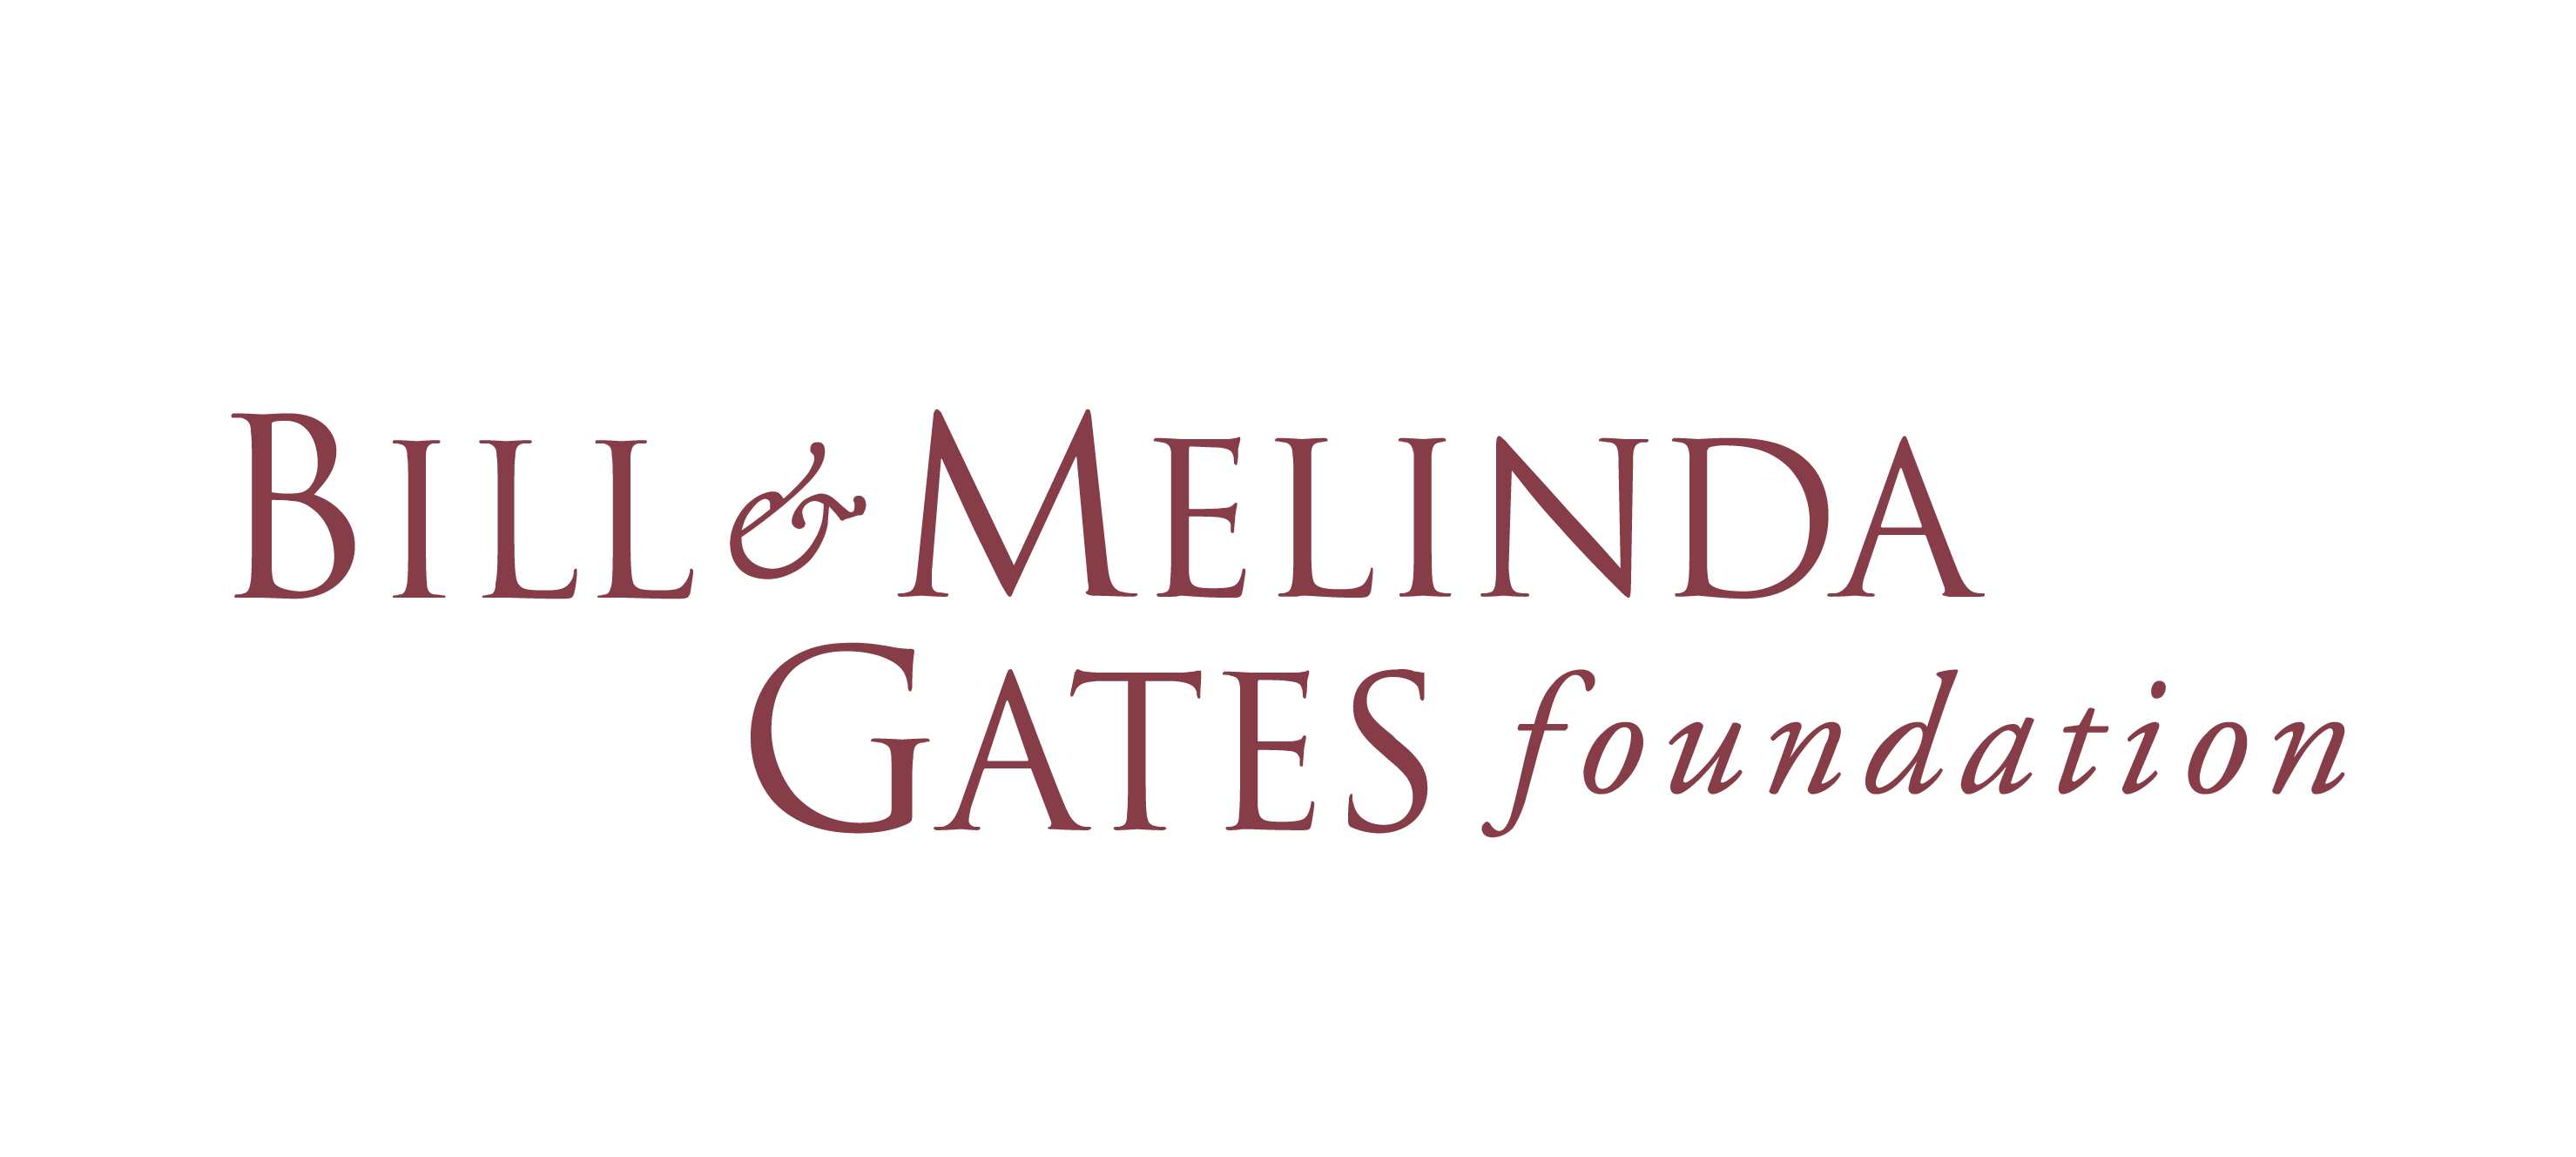 Gates Foundation-01-01